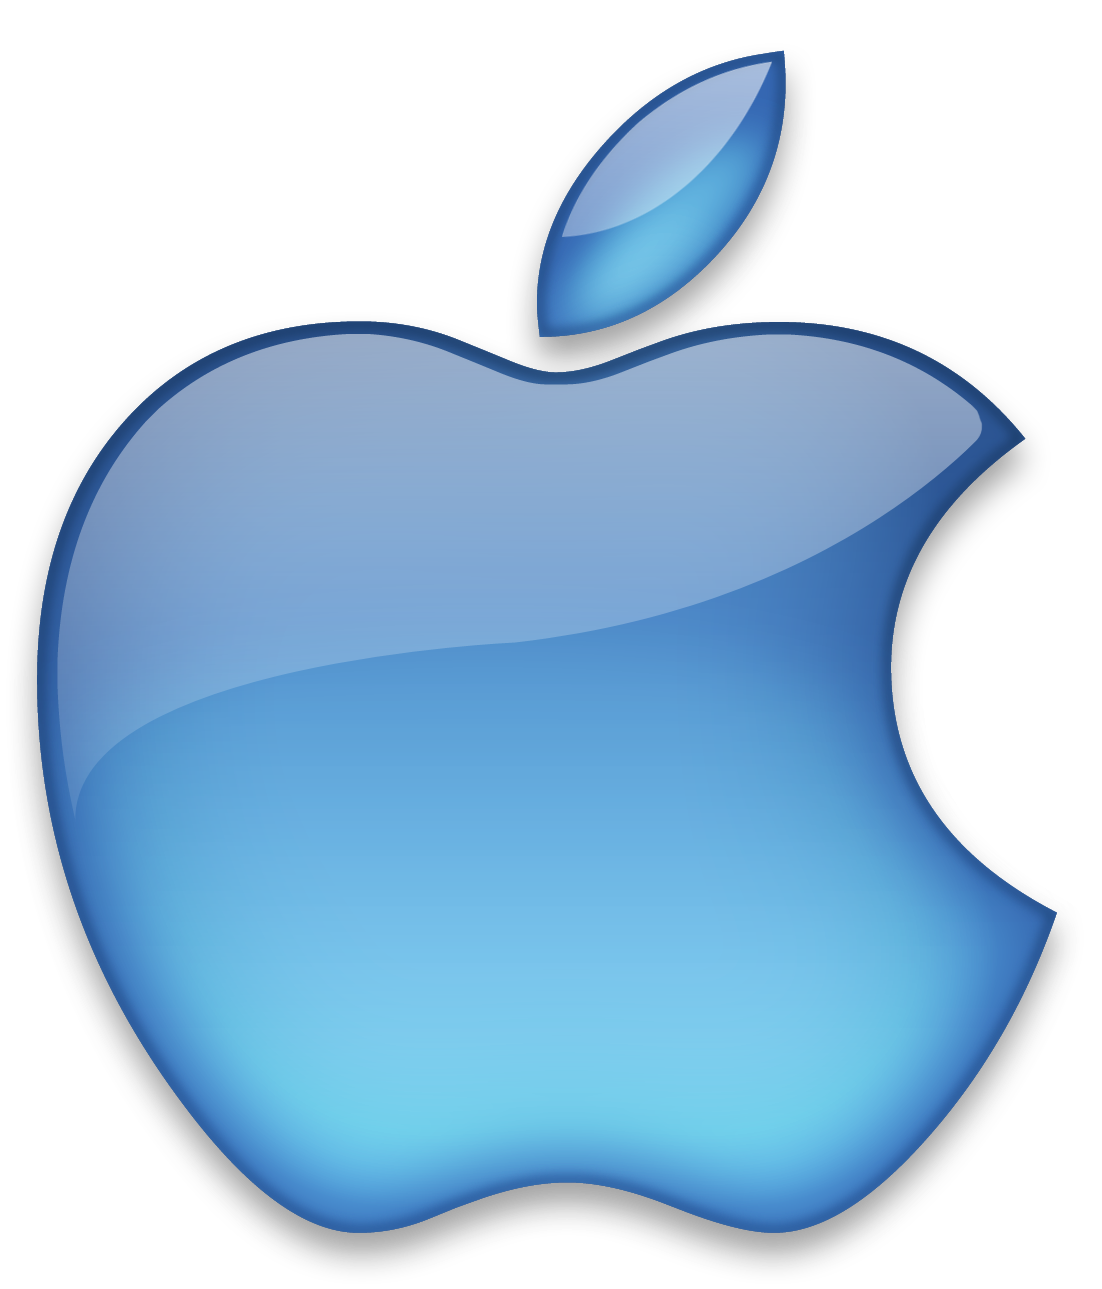 Apple 'aqua' logo